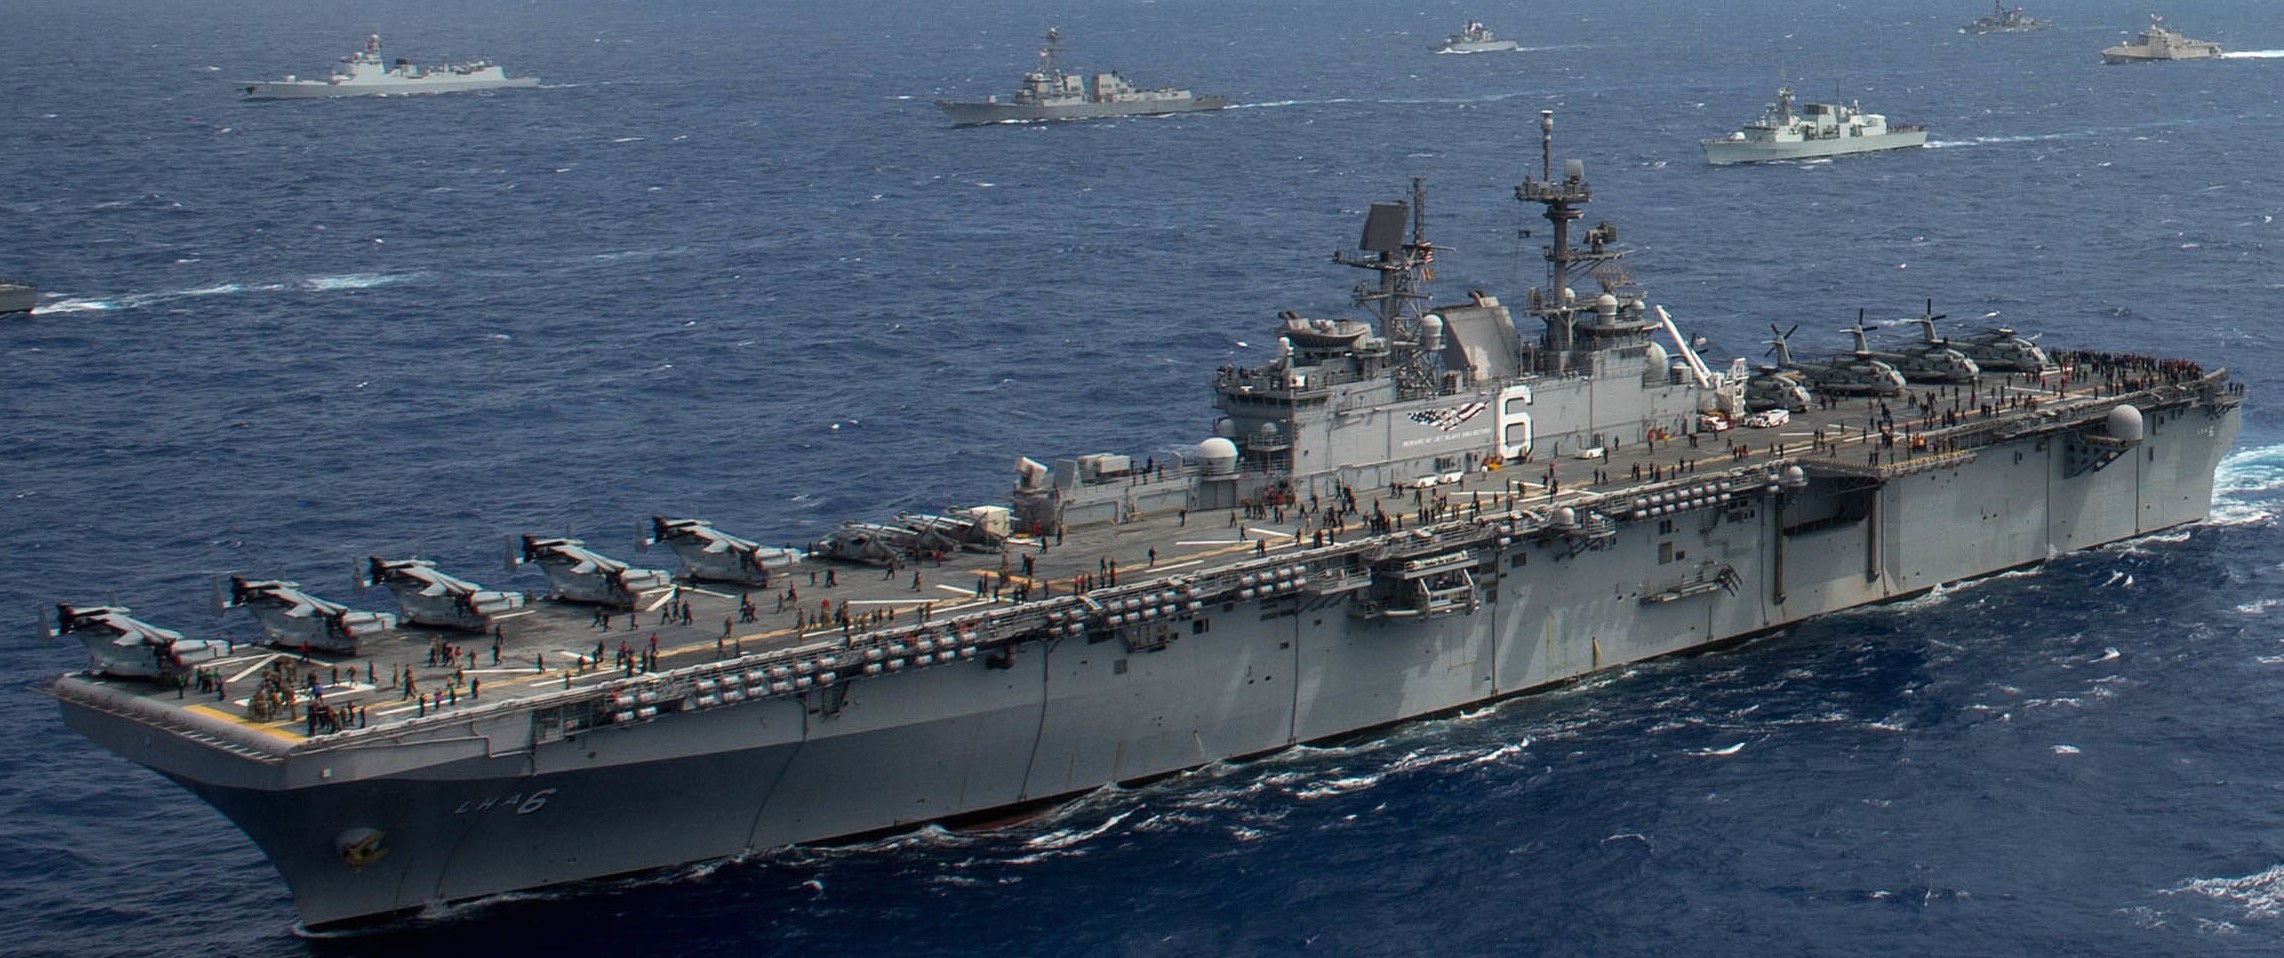 lha-6 uss america amphibious assault ship us navy 117